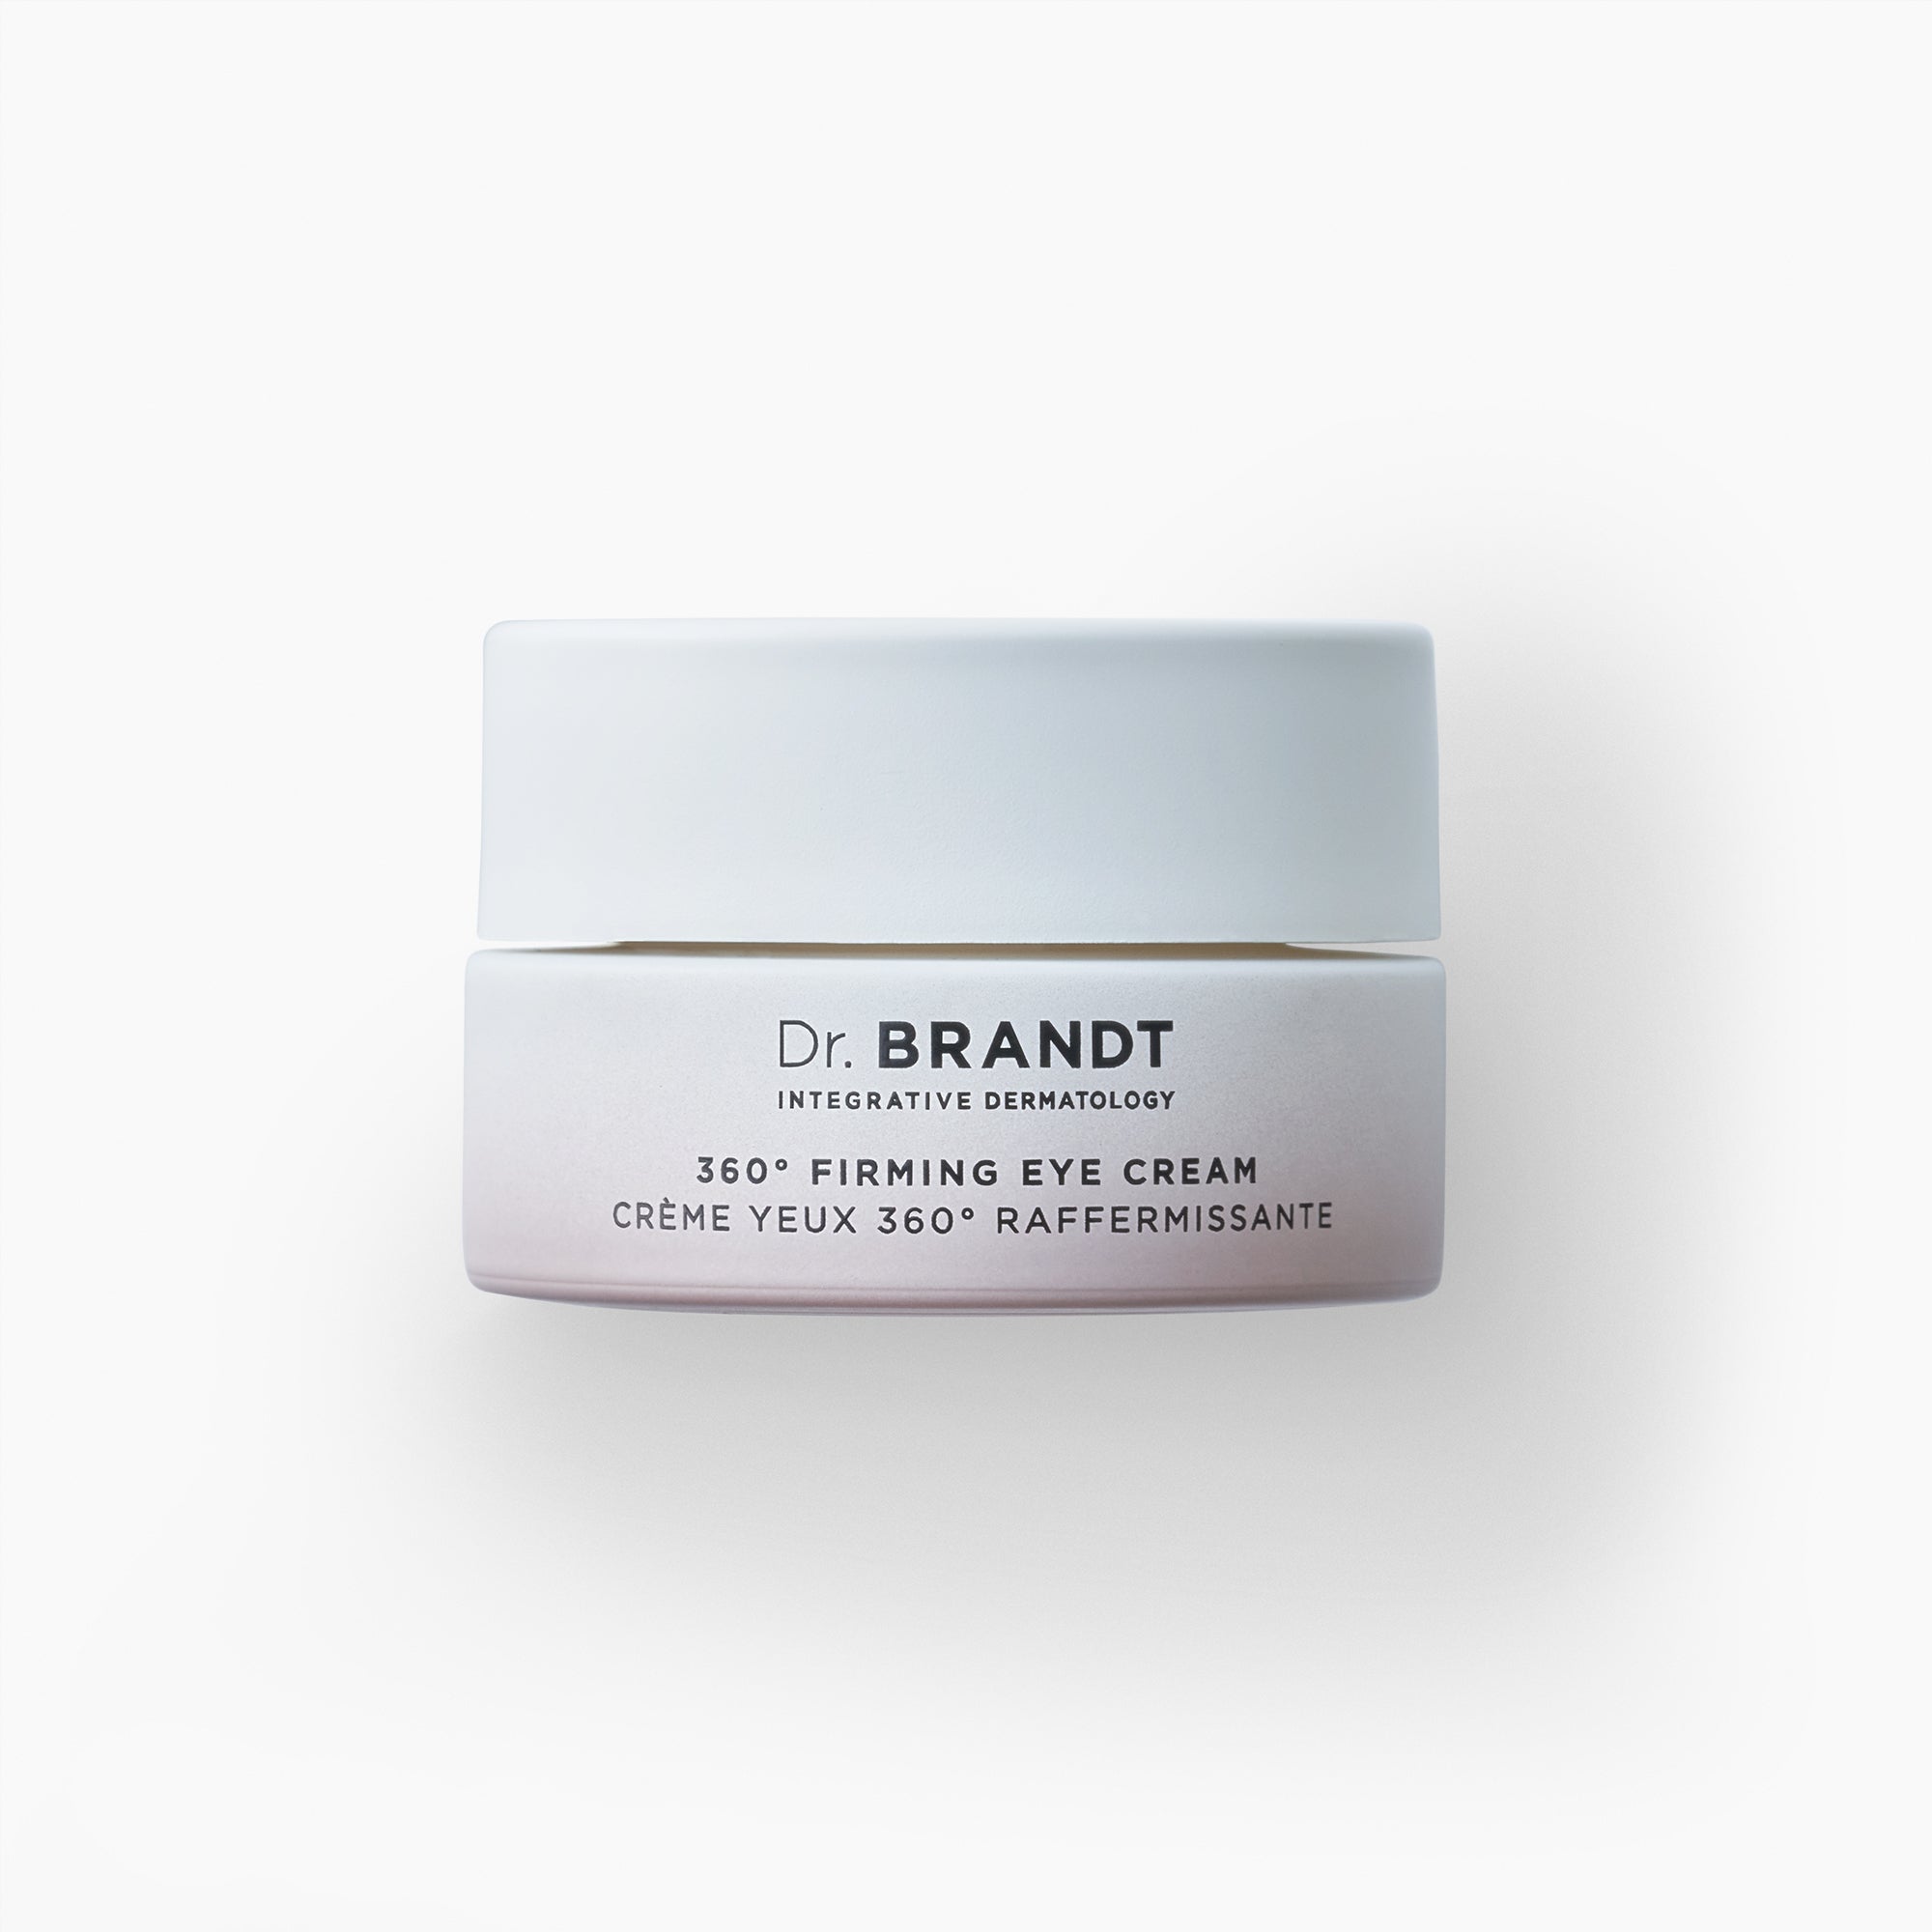 Dr. Brandt Skincare Do not Age With Dr. Brandt Triple Peptide Eye Cream 0.5  oz.